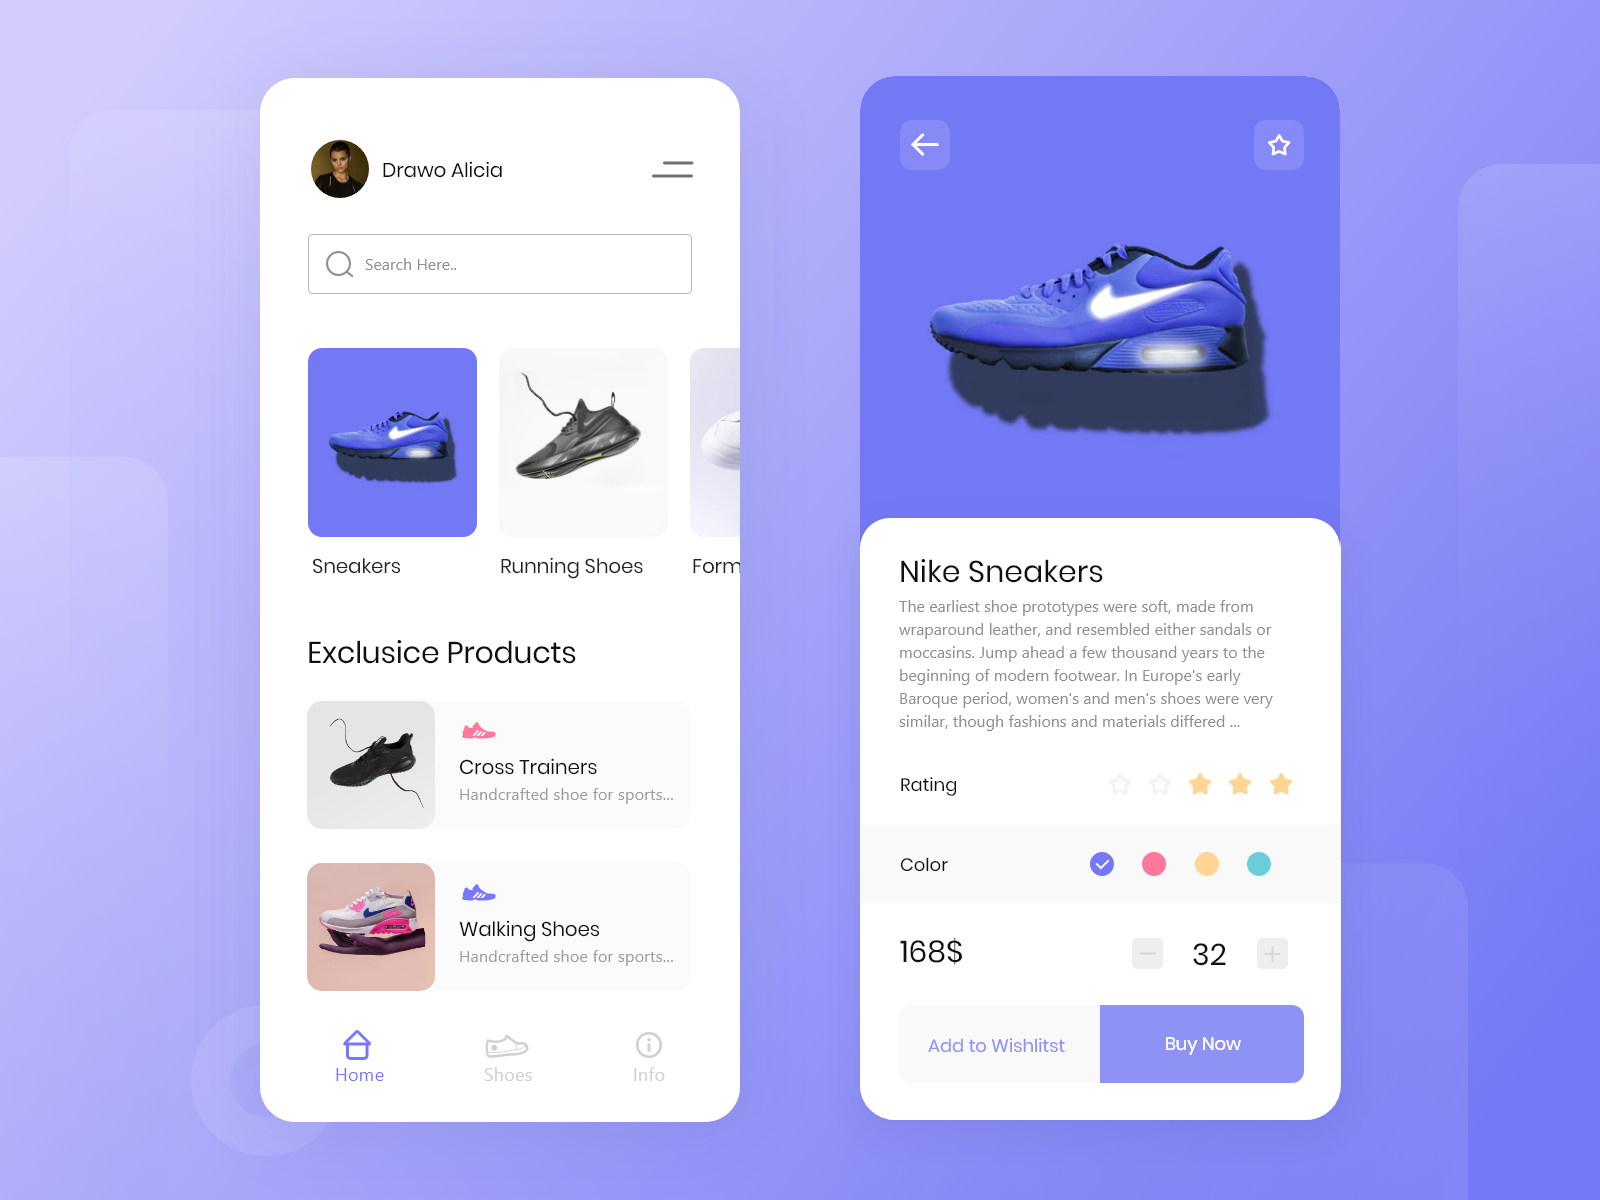 Shoe Store Mobile Application by Ajo Jose on Dribbble